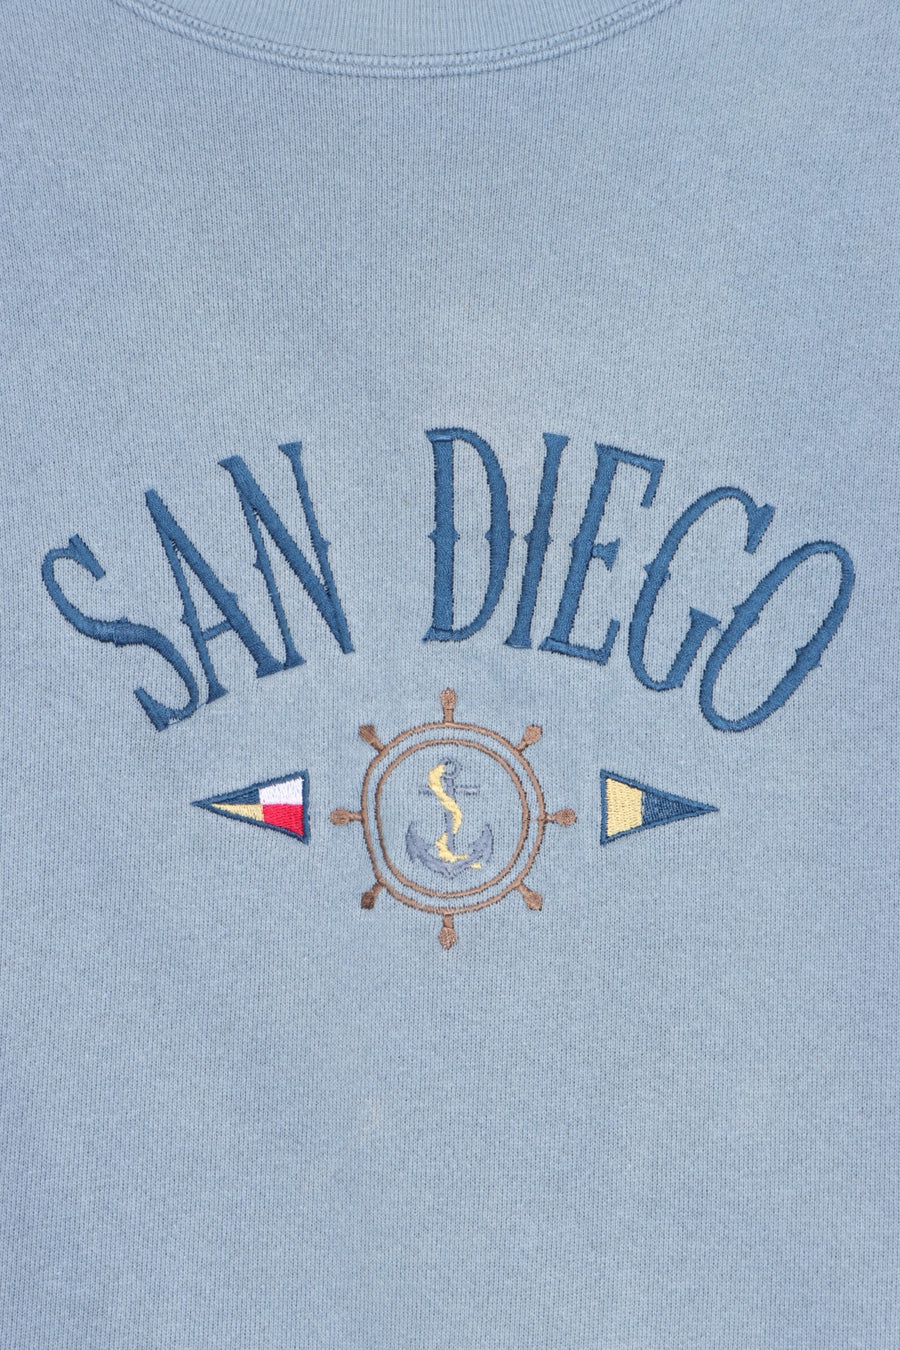 San Diego Embroidered Nautical Sweatshirt (XL)